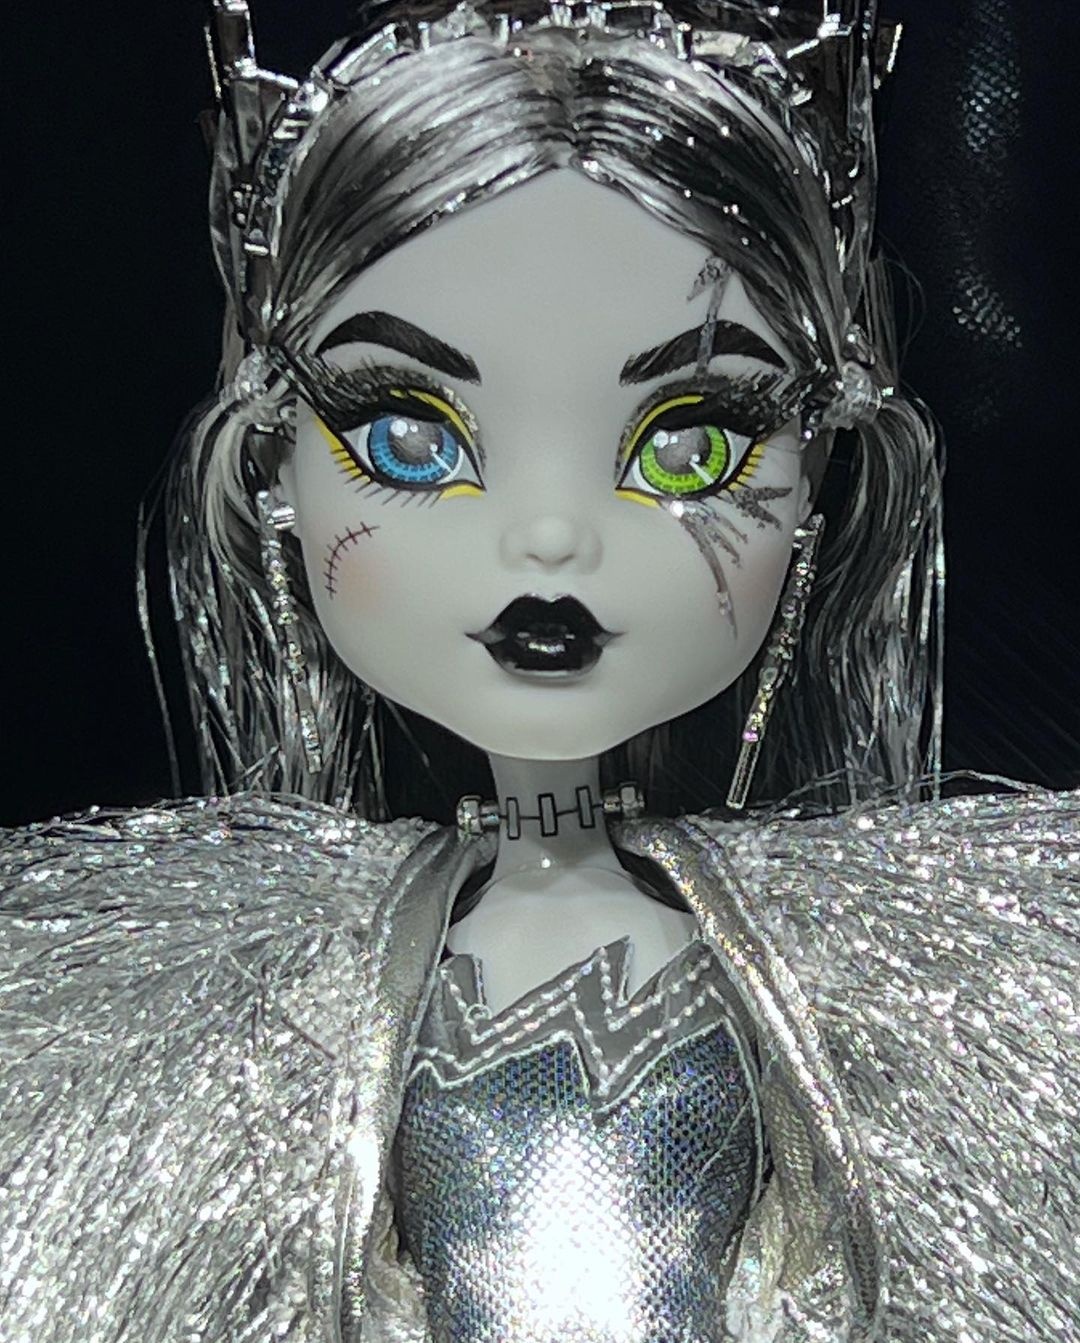 Monster High Voltageous Frankie Stein Doll Brand new